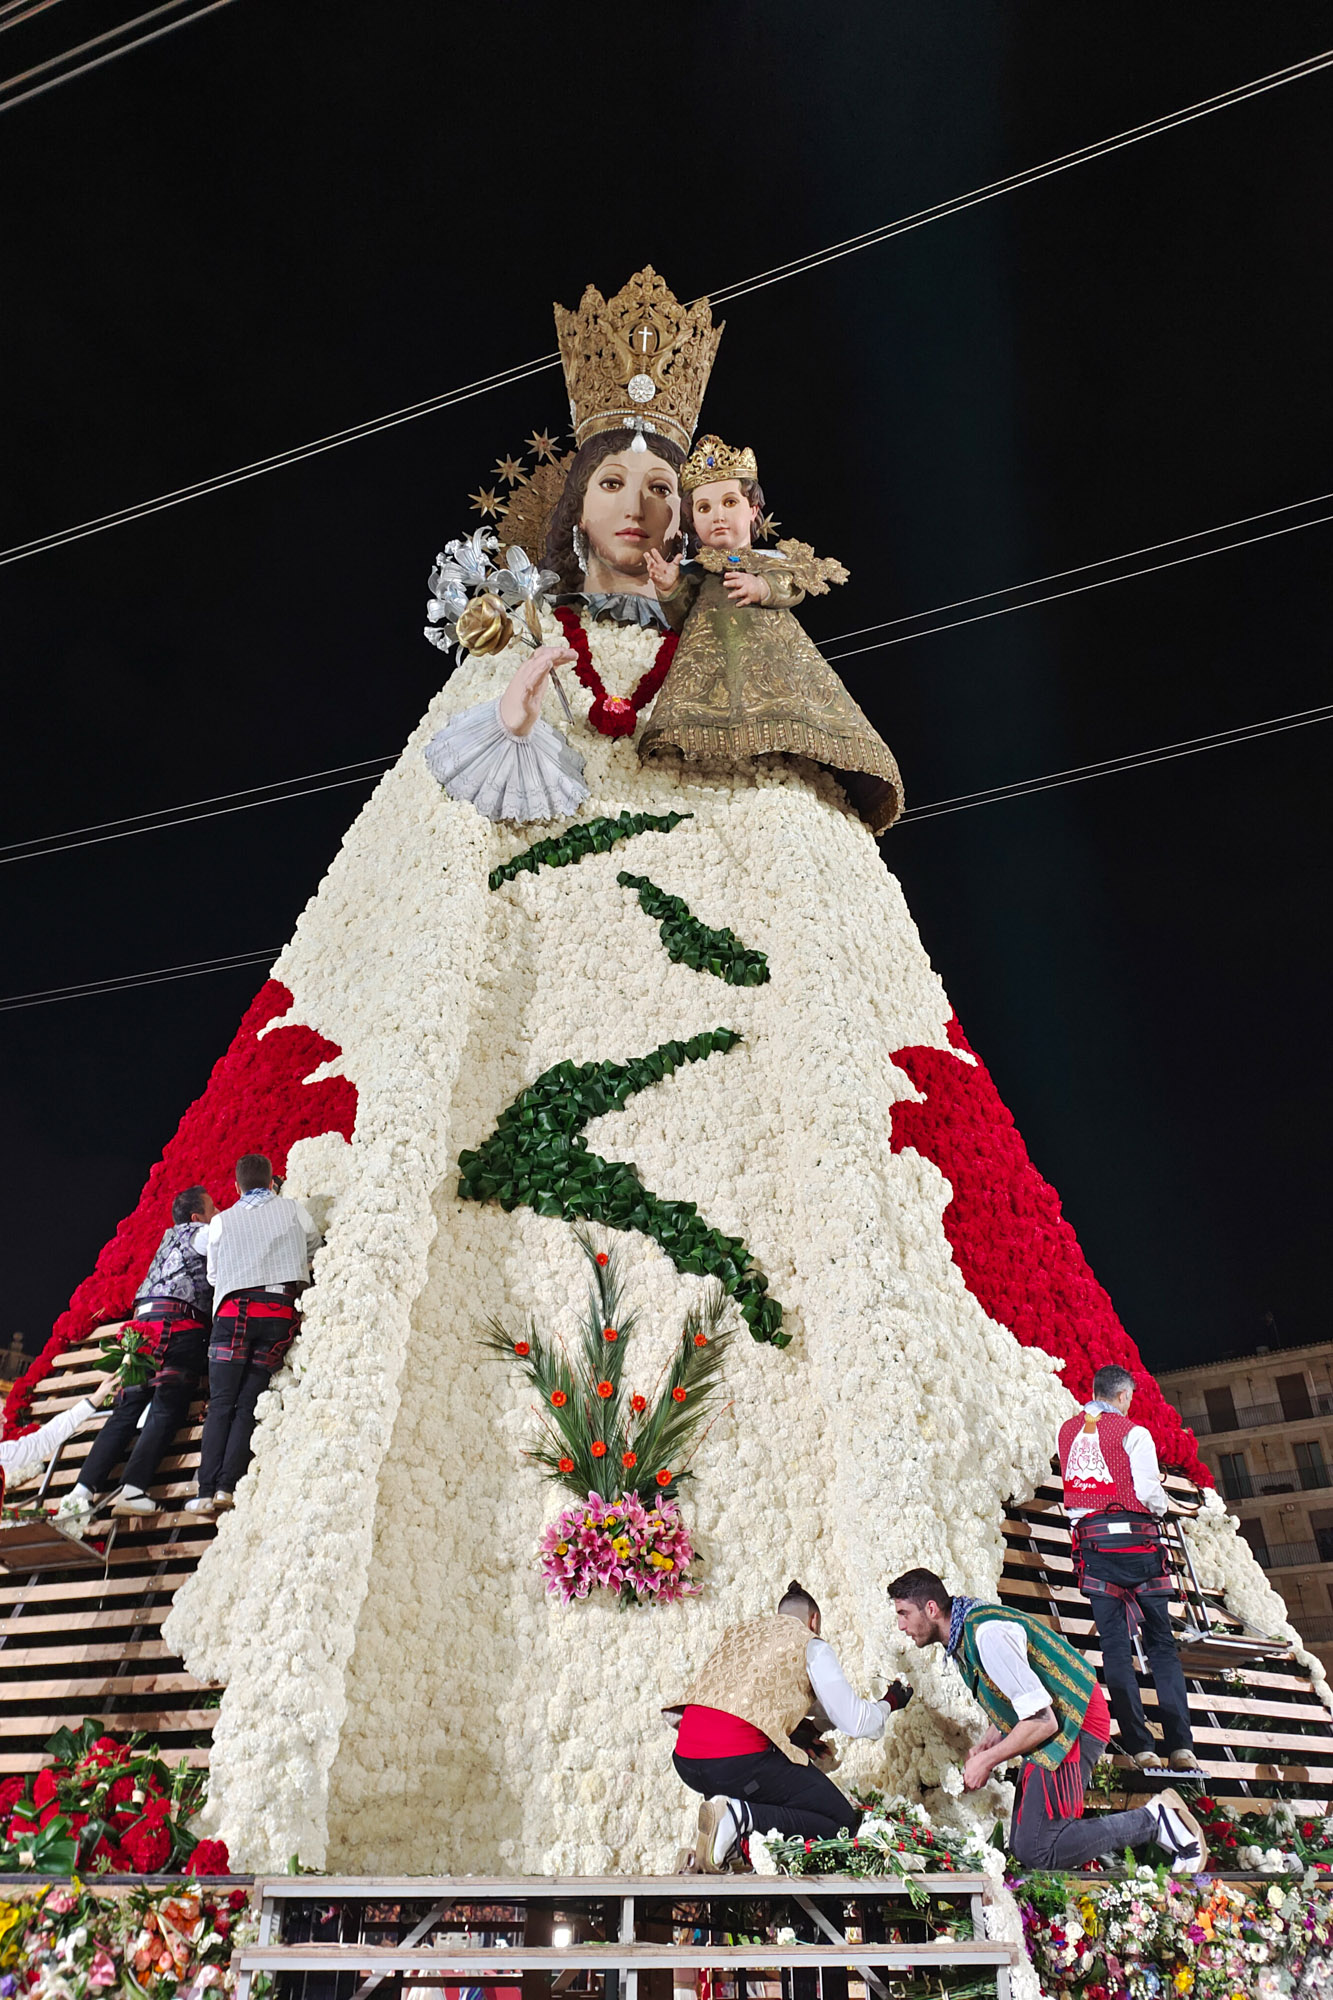 The dress from the front Virgin La Ofrenda Fallas